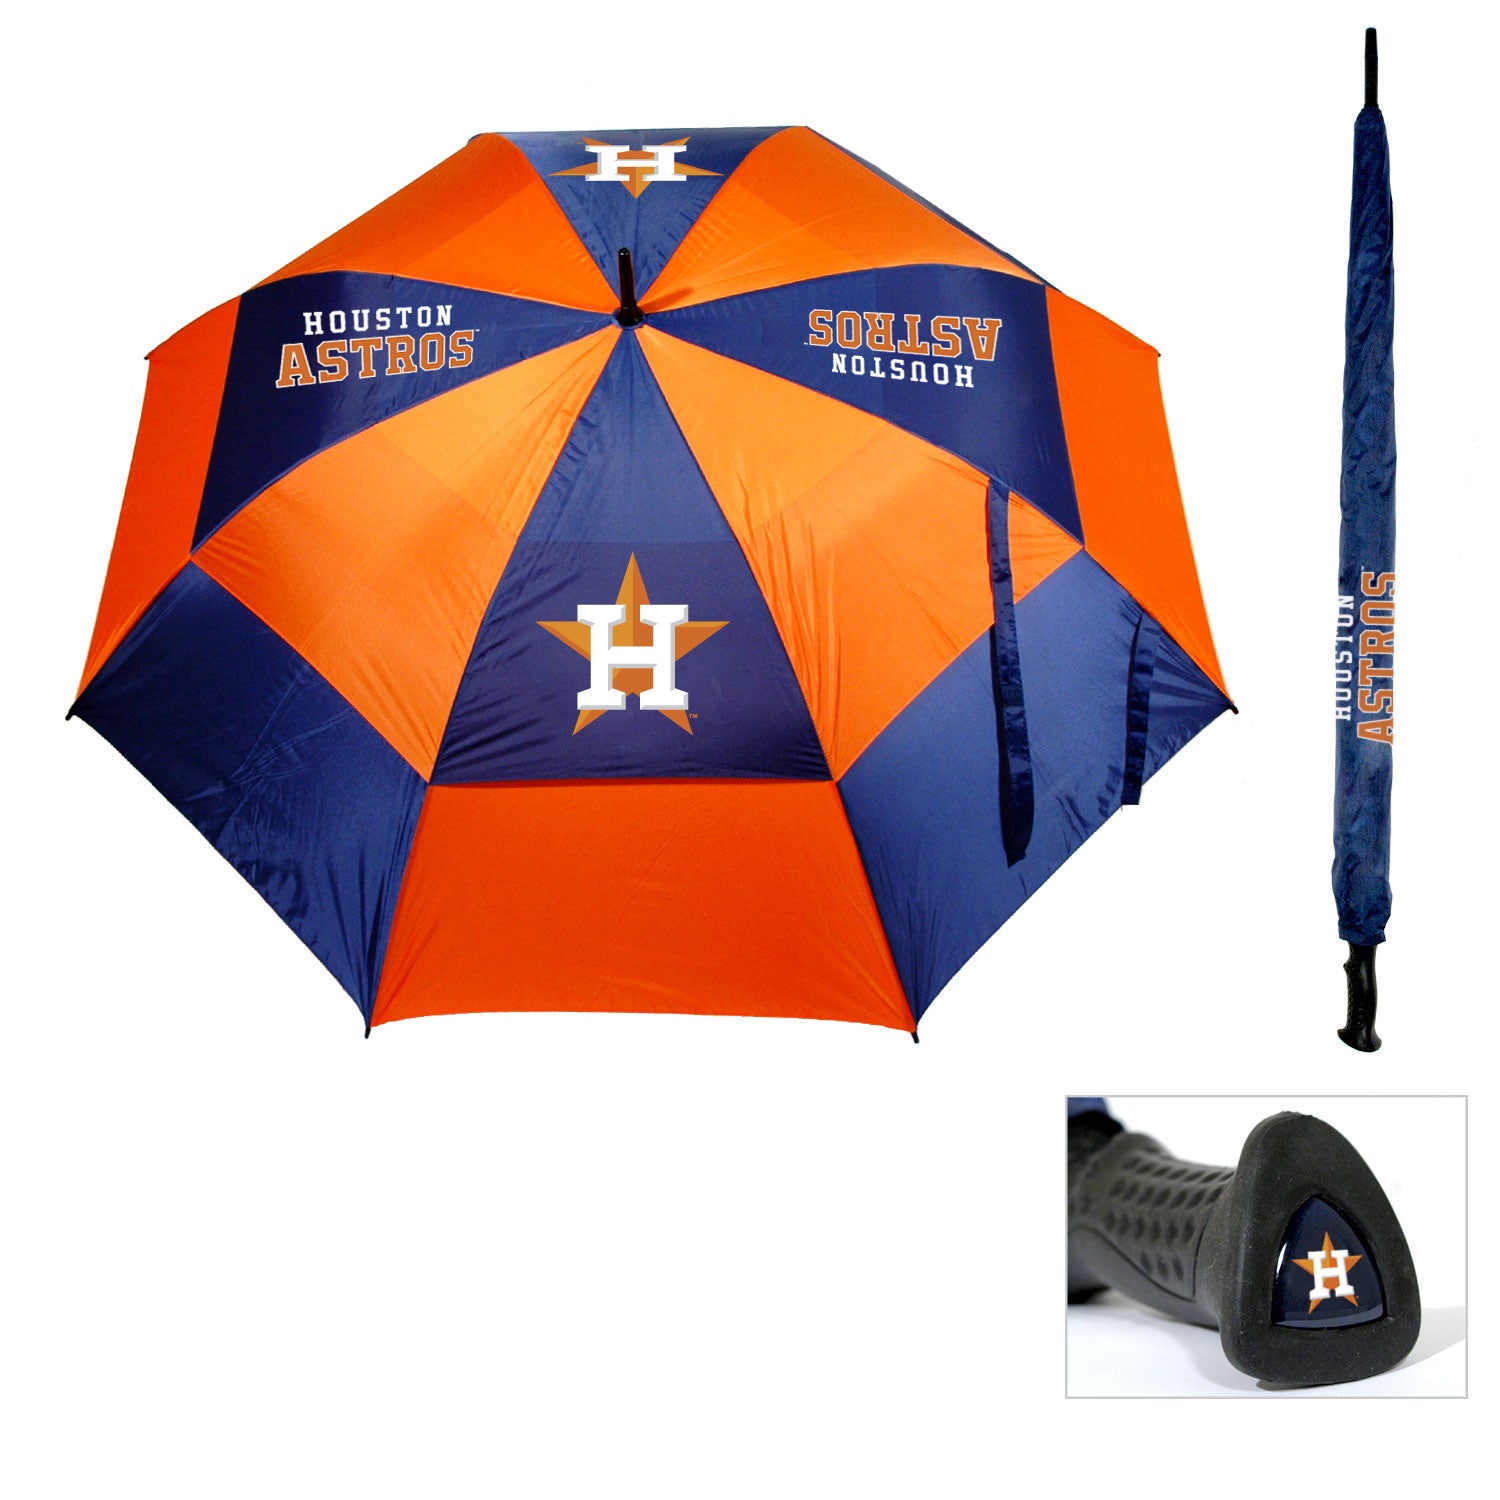 Houston Astros Umbrella